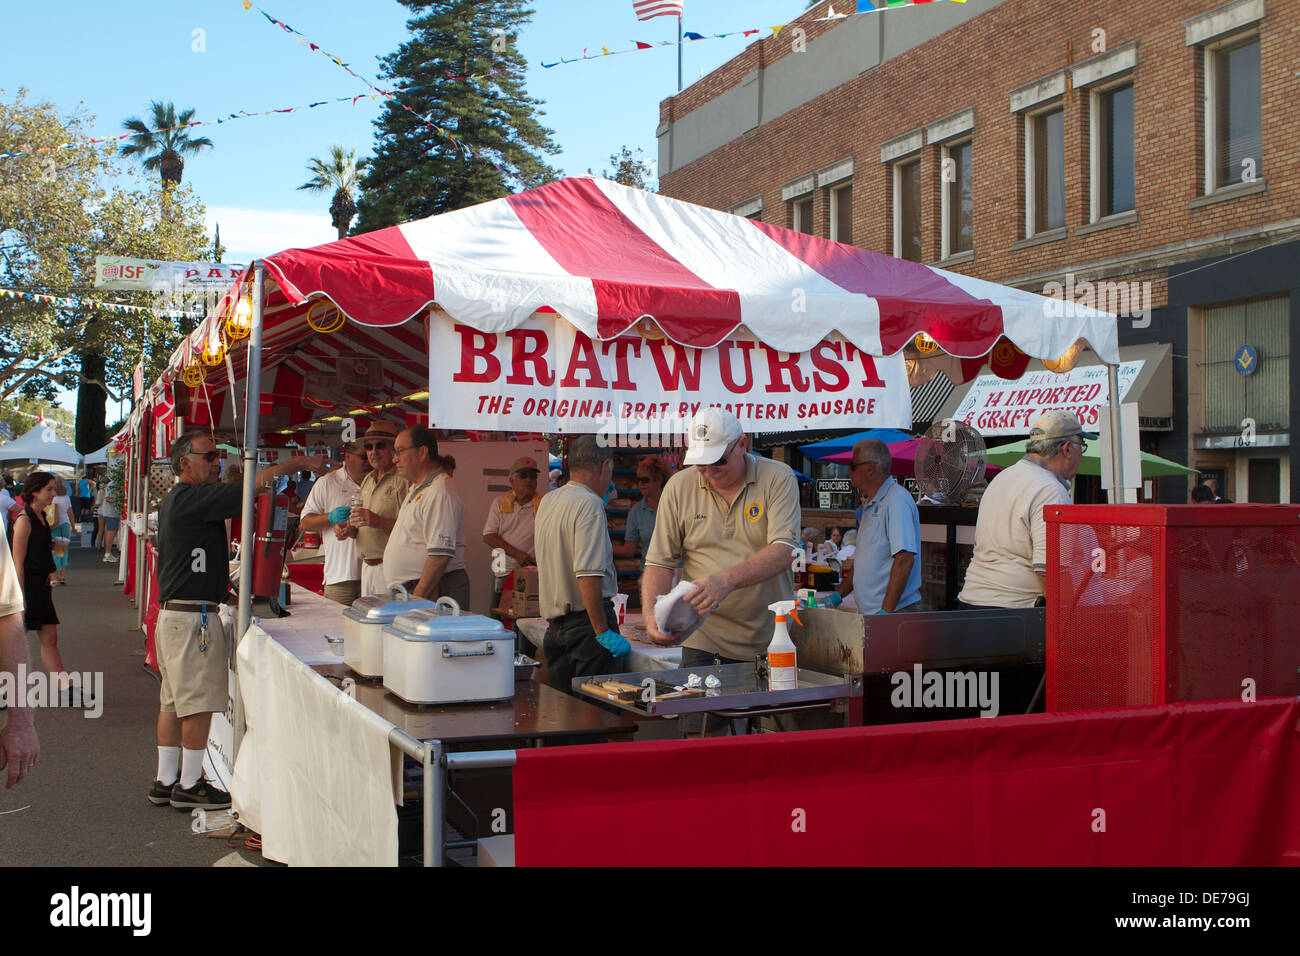 City of Orange street fair stall selling Bratwurst sausages Stock Photo